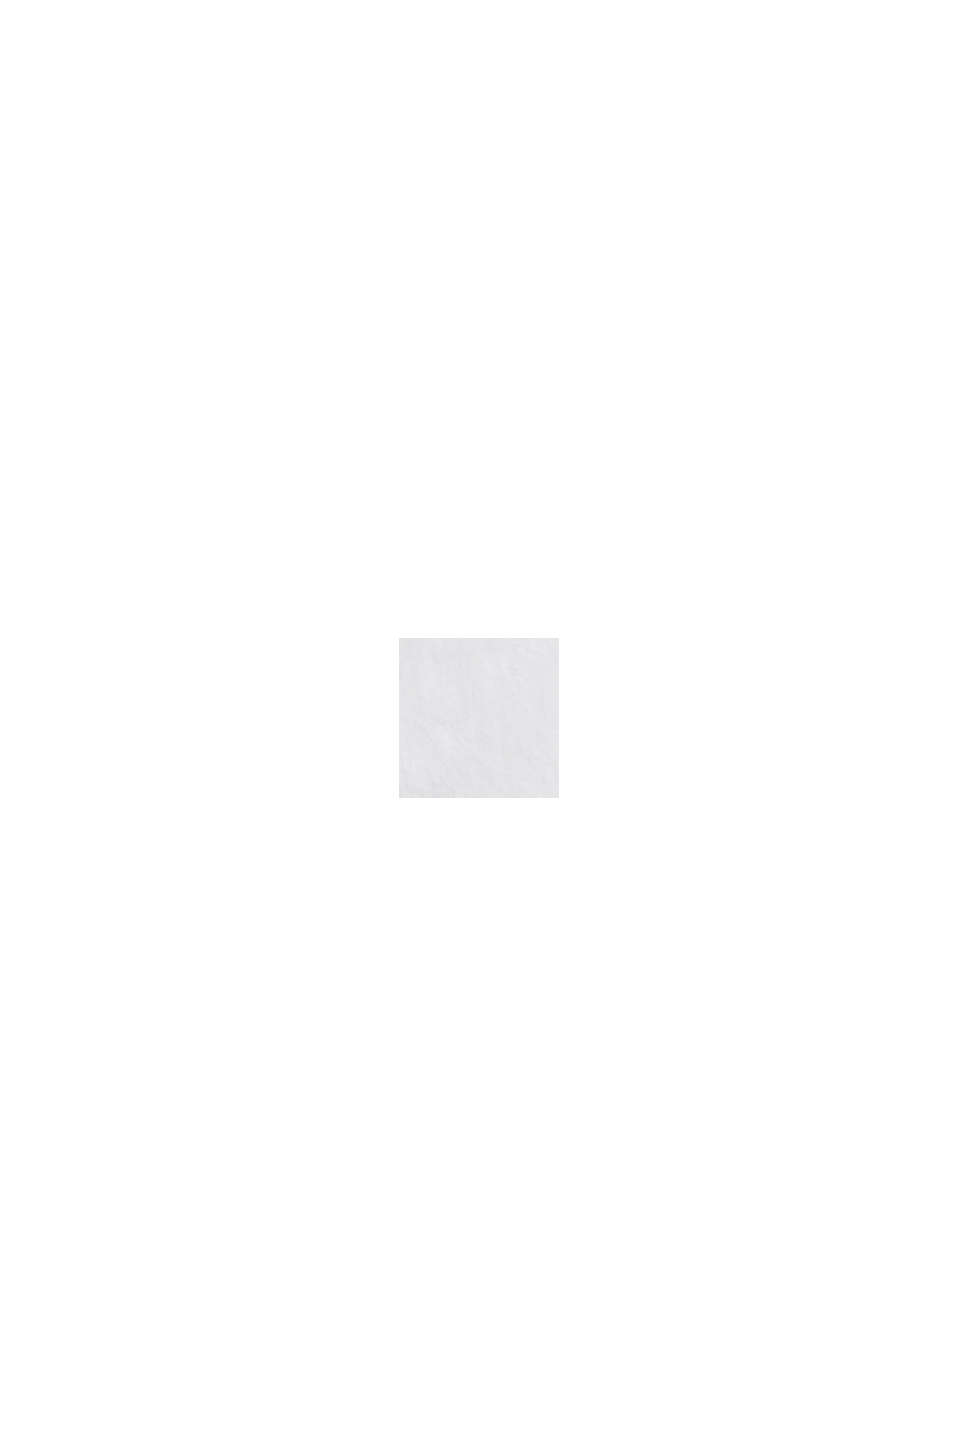 ESPRIT x Rest & Recreation Capsule Oxford Shirt, WHITE, swatch